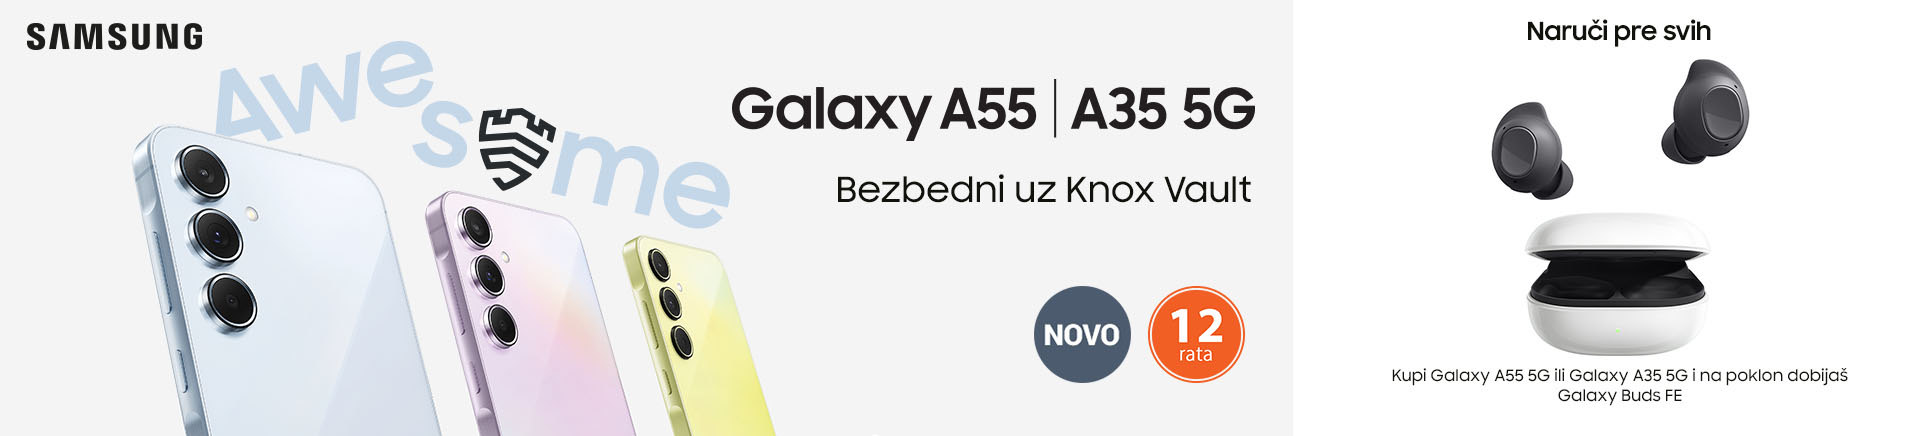 RS~Samsung Galaxy A35 i A55 MOBILE 760x872 LANDING.jpg